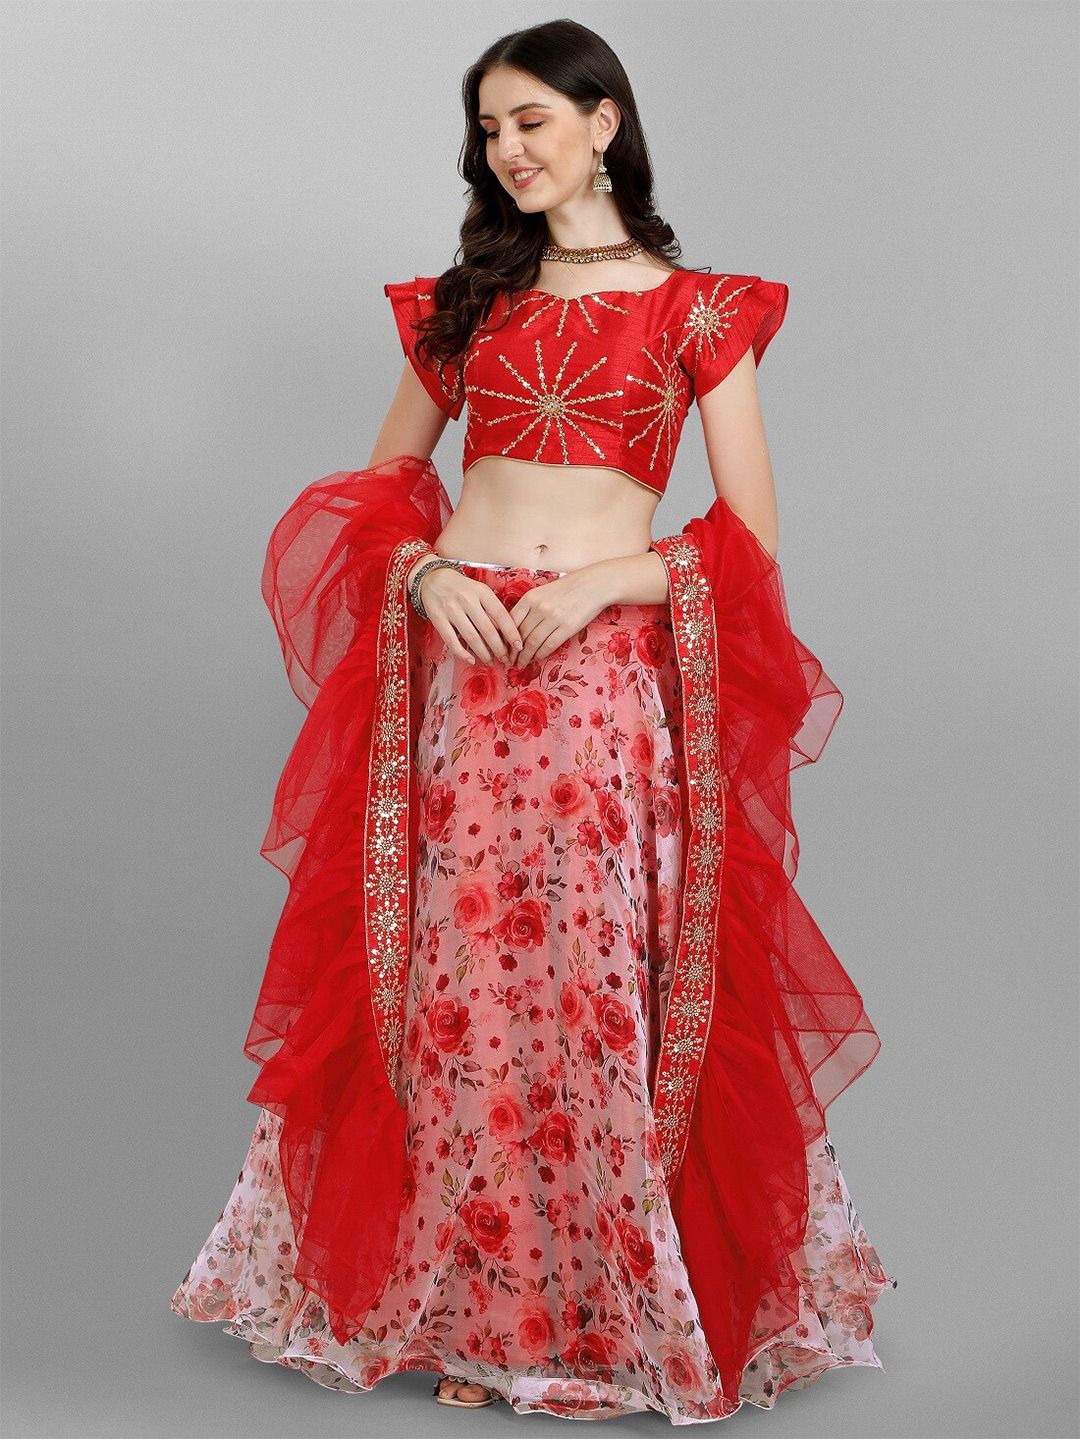 Fashionuma Red & White Embroidered Unstitched Lehenga & Blouse With Dupatta Price in India